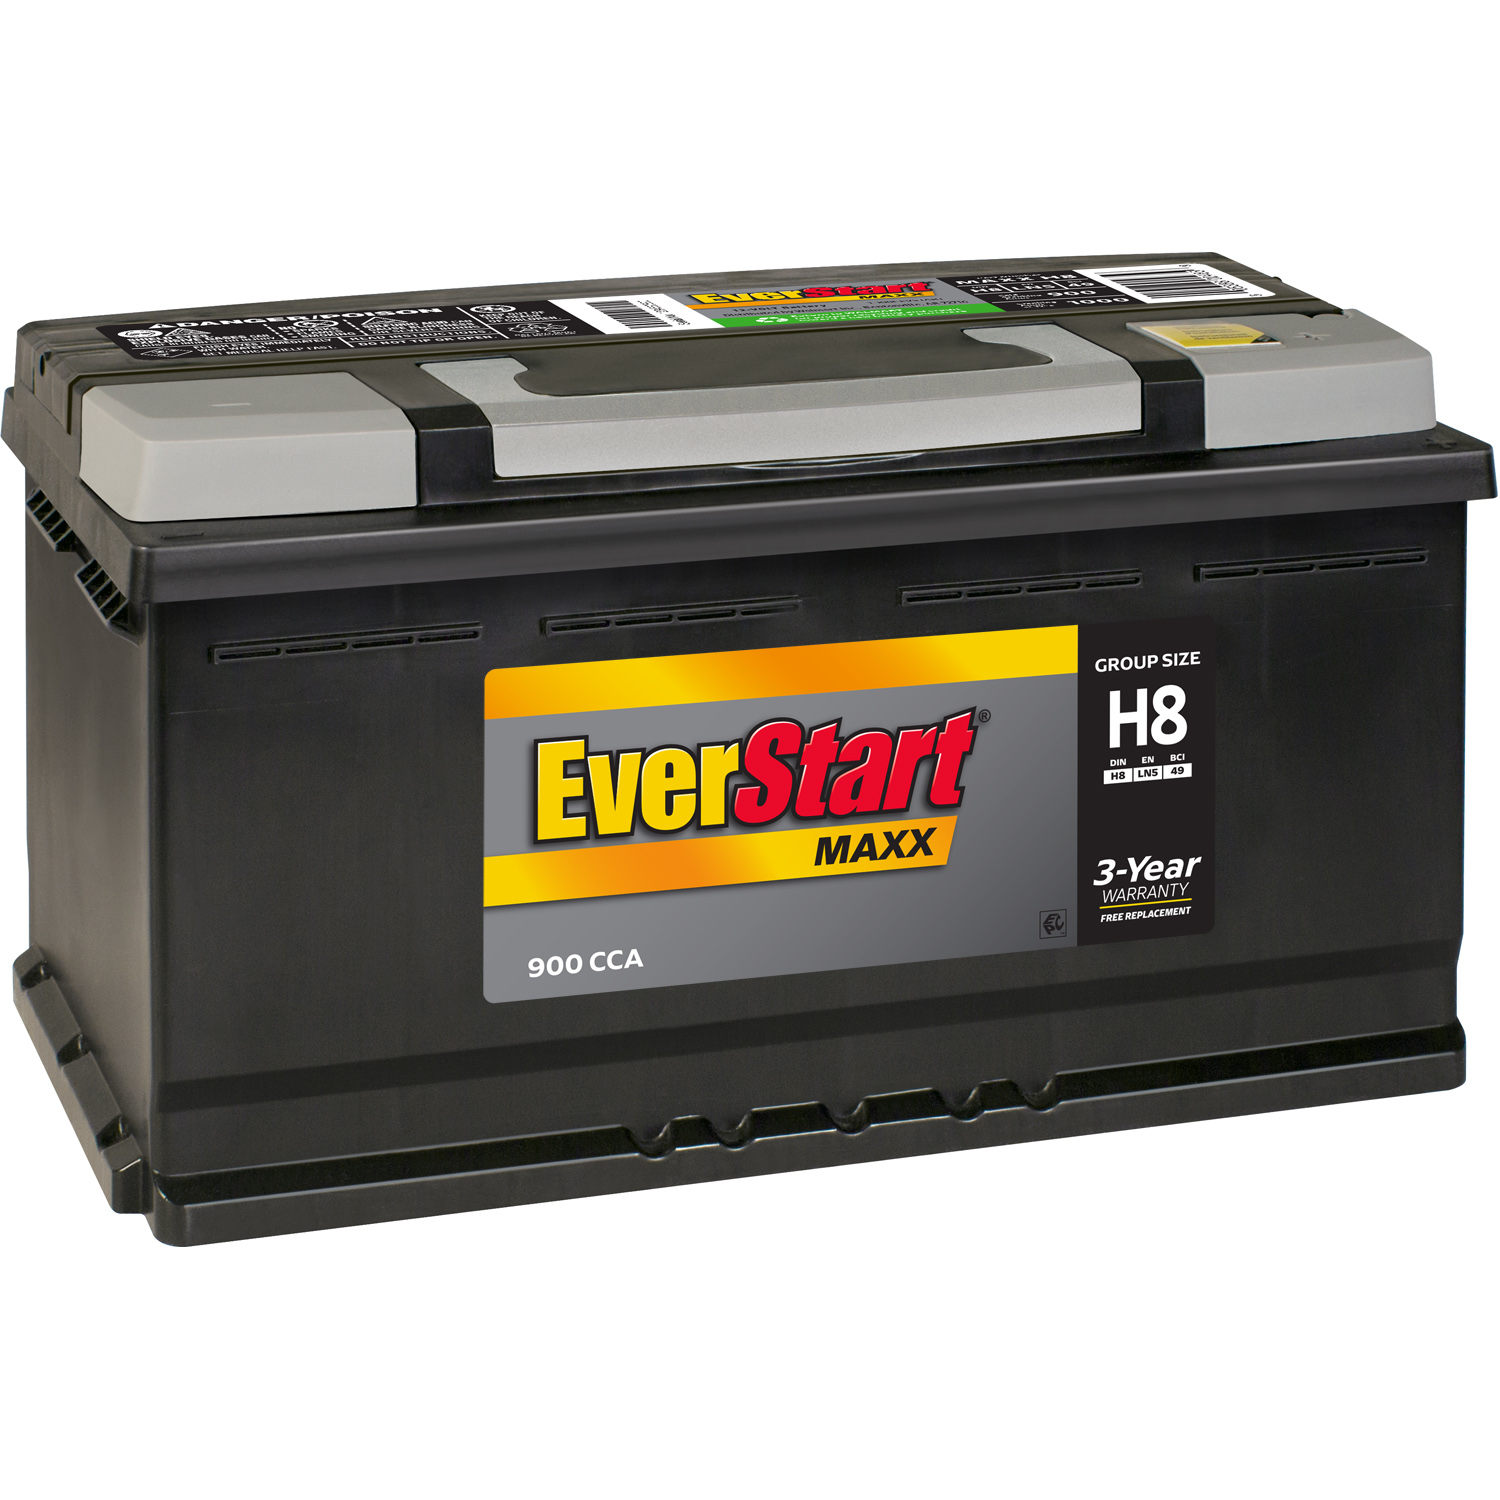 EverStart Maxx Lead Acid Automotive Battery, Group Size H8 / LN5 / 49 12 Volt, 900 CCA - image 1 of 7